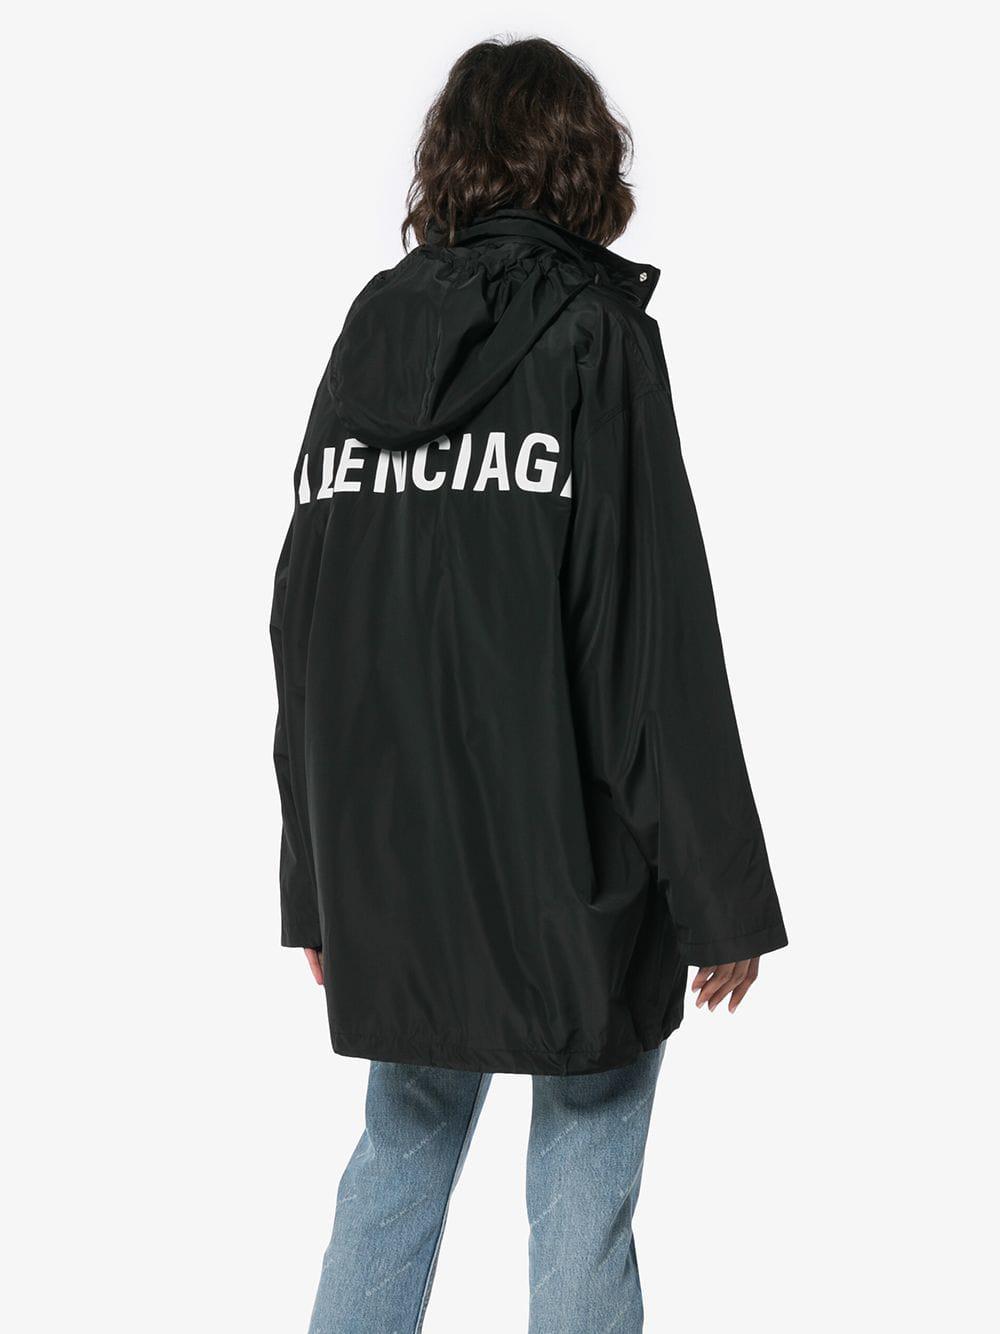 Balenciaga Long Print Hooded Windbreaker Jacket in Black | Lyst